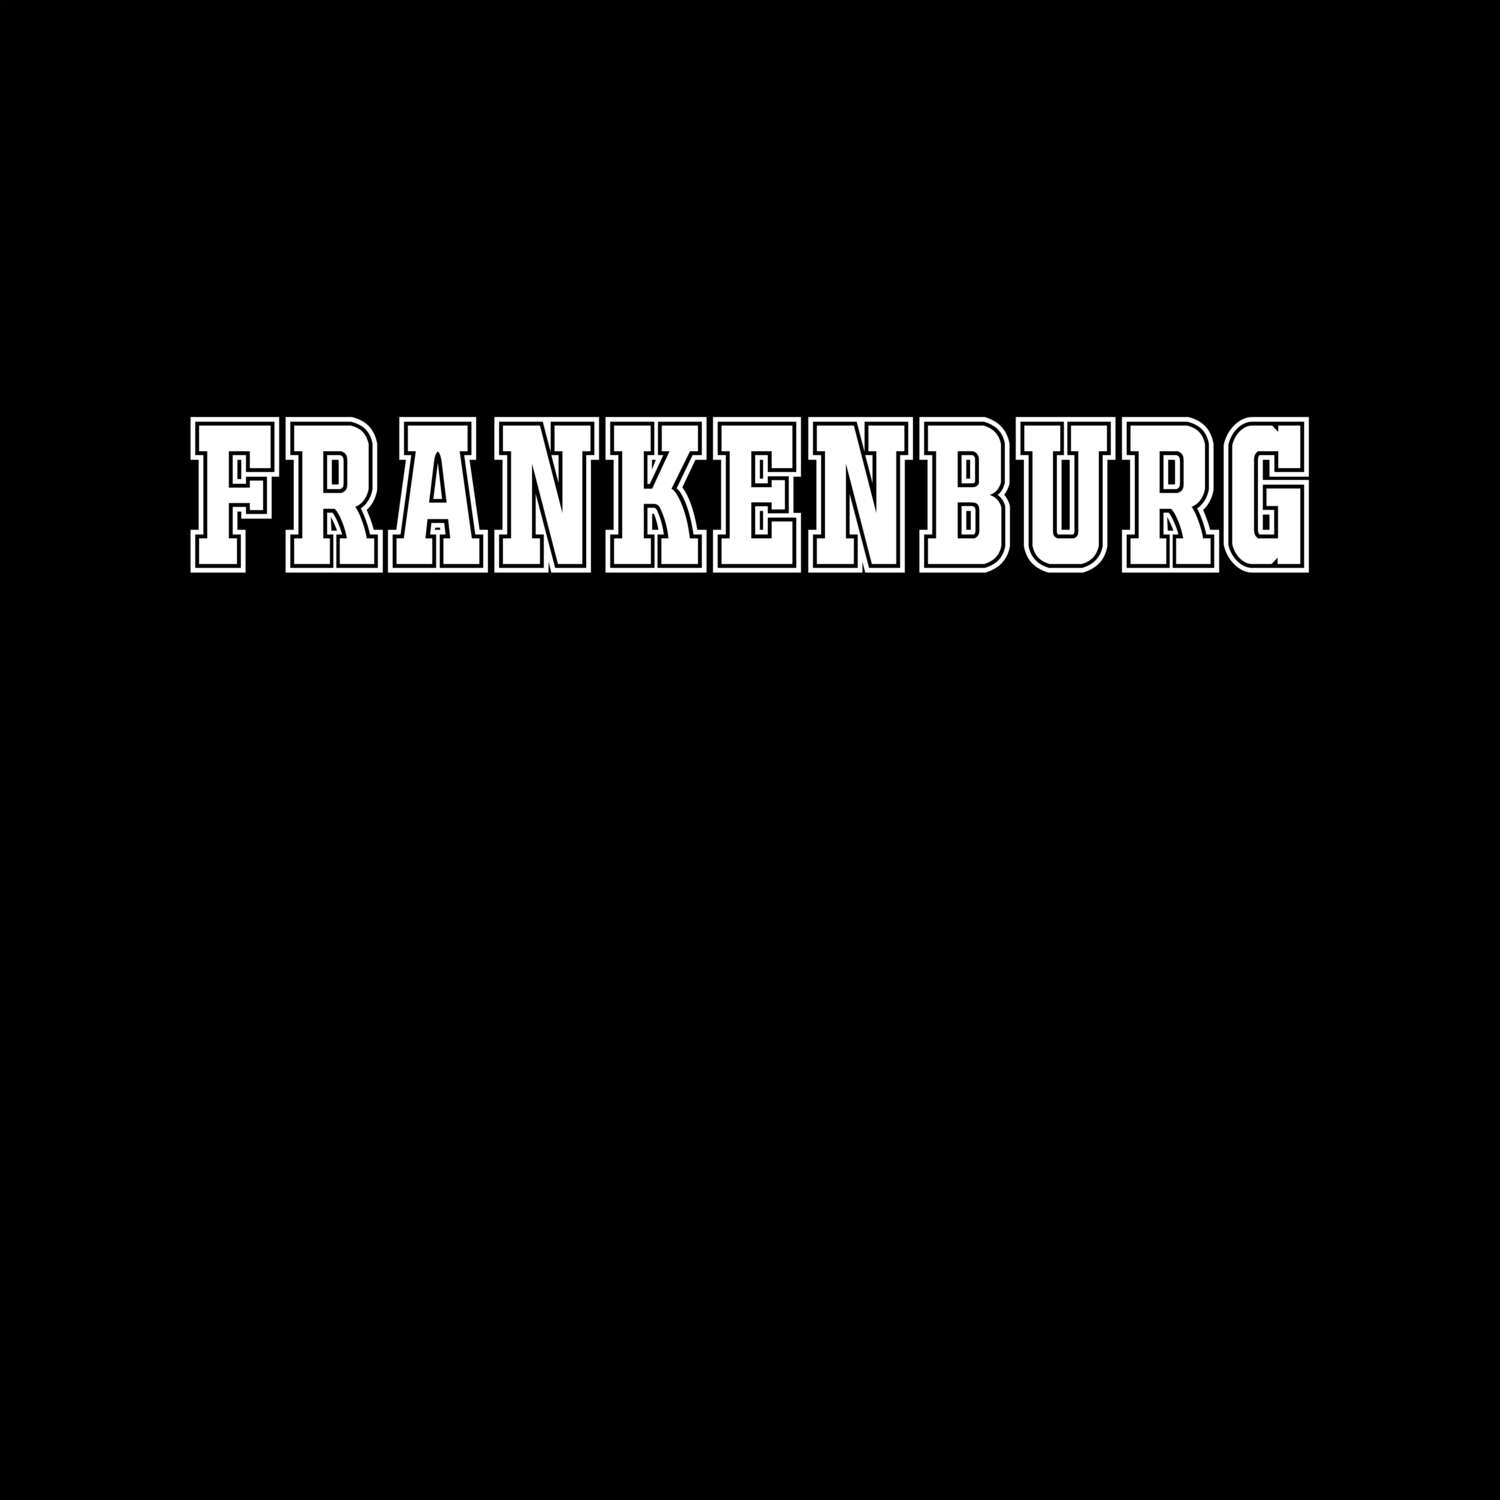 Frankenburg T-Shirt »Classic«